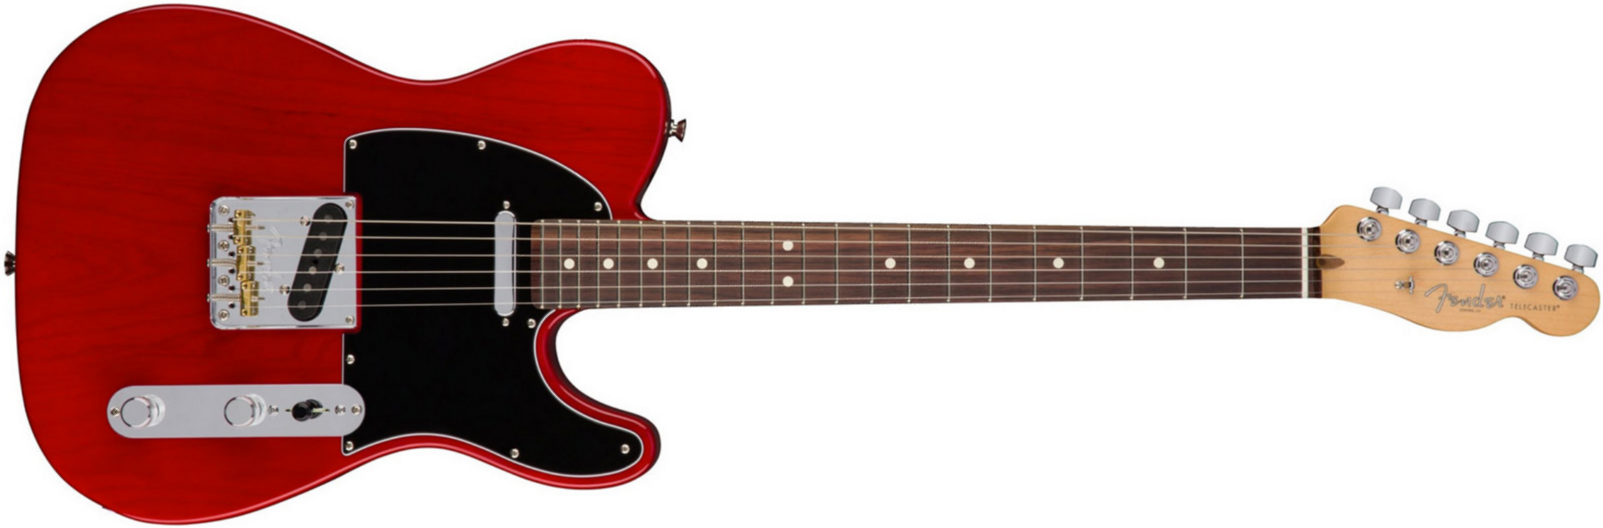 Fender Tele American Professional 2s Usa Rw - Crimson Red Transparent - E-Gitarre in Str-Form - Main picture